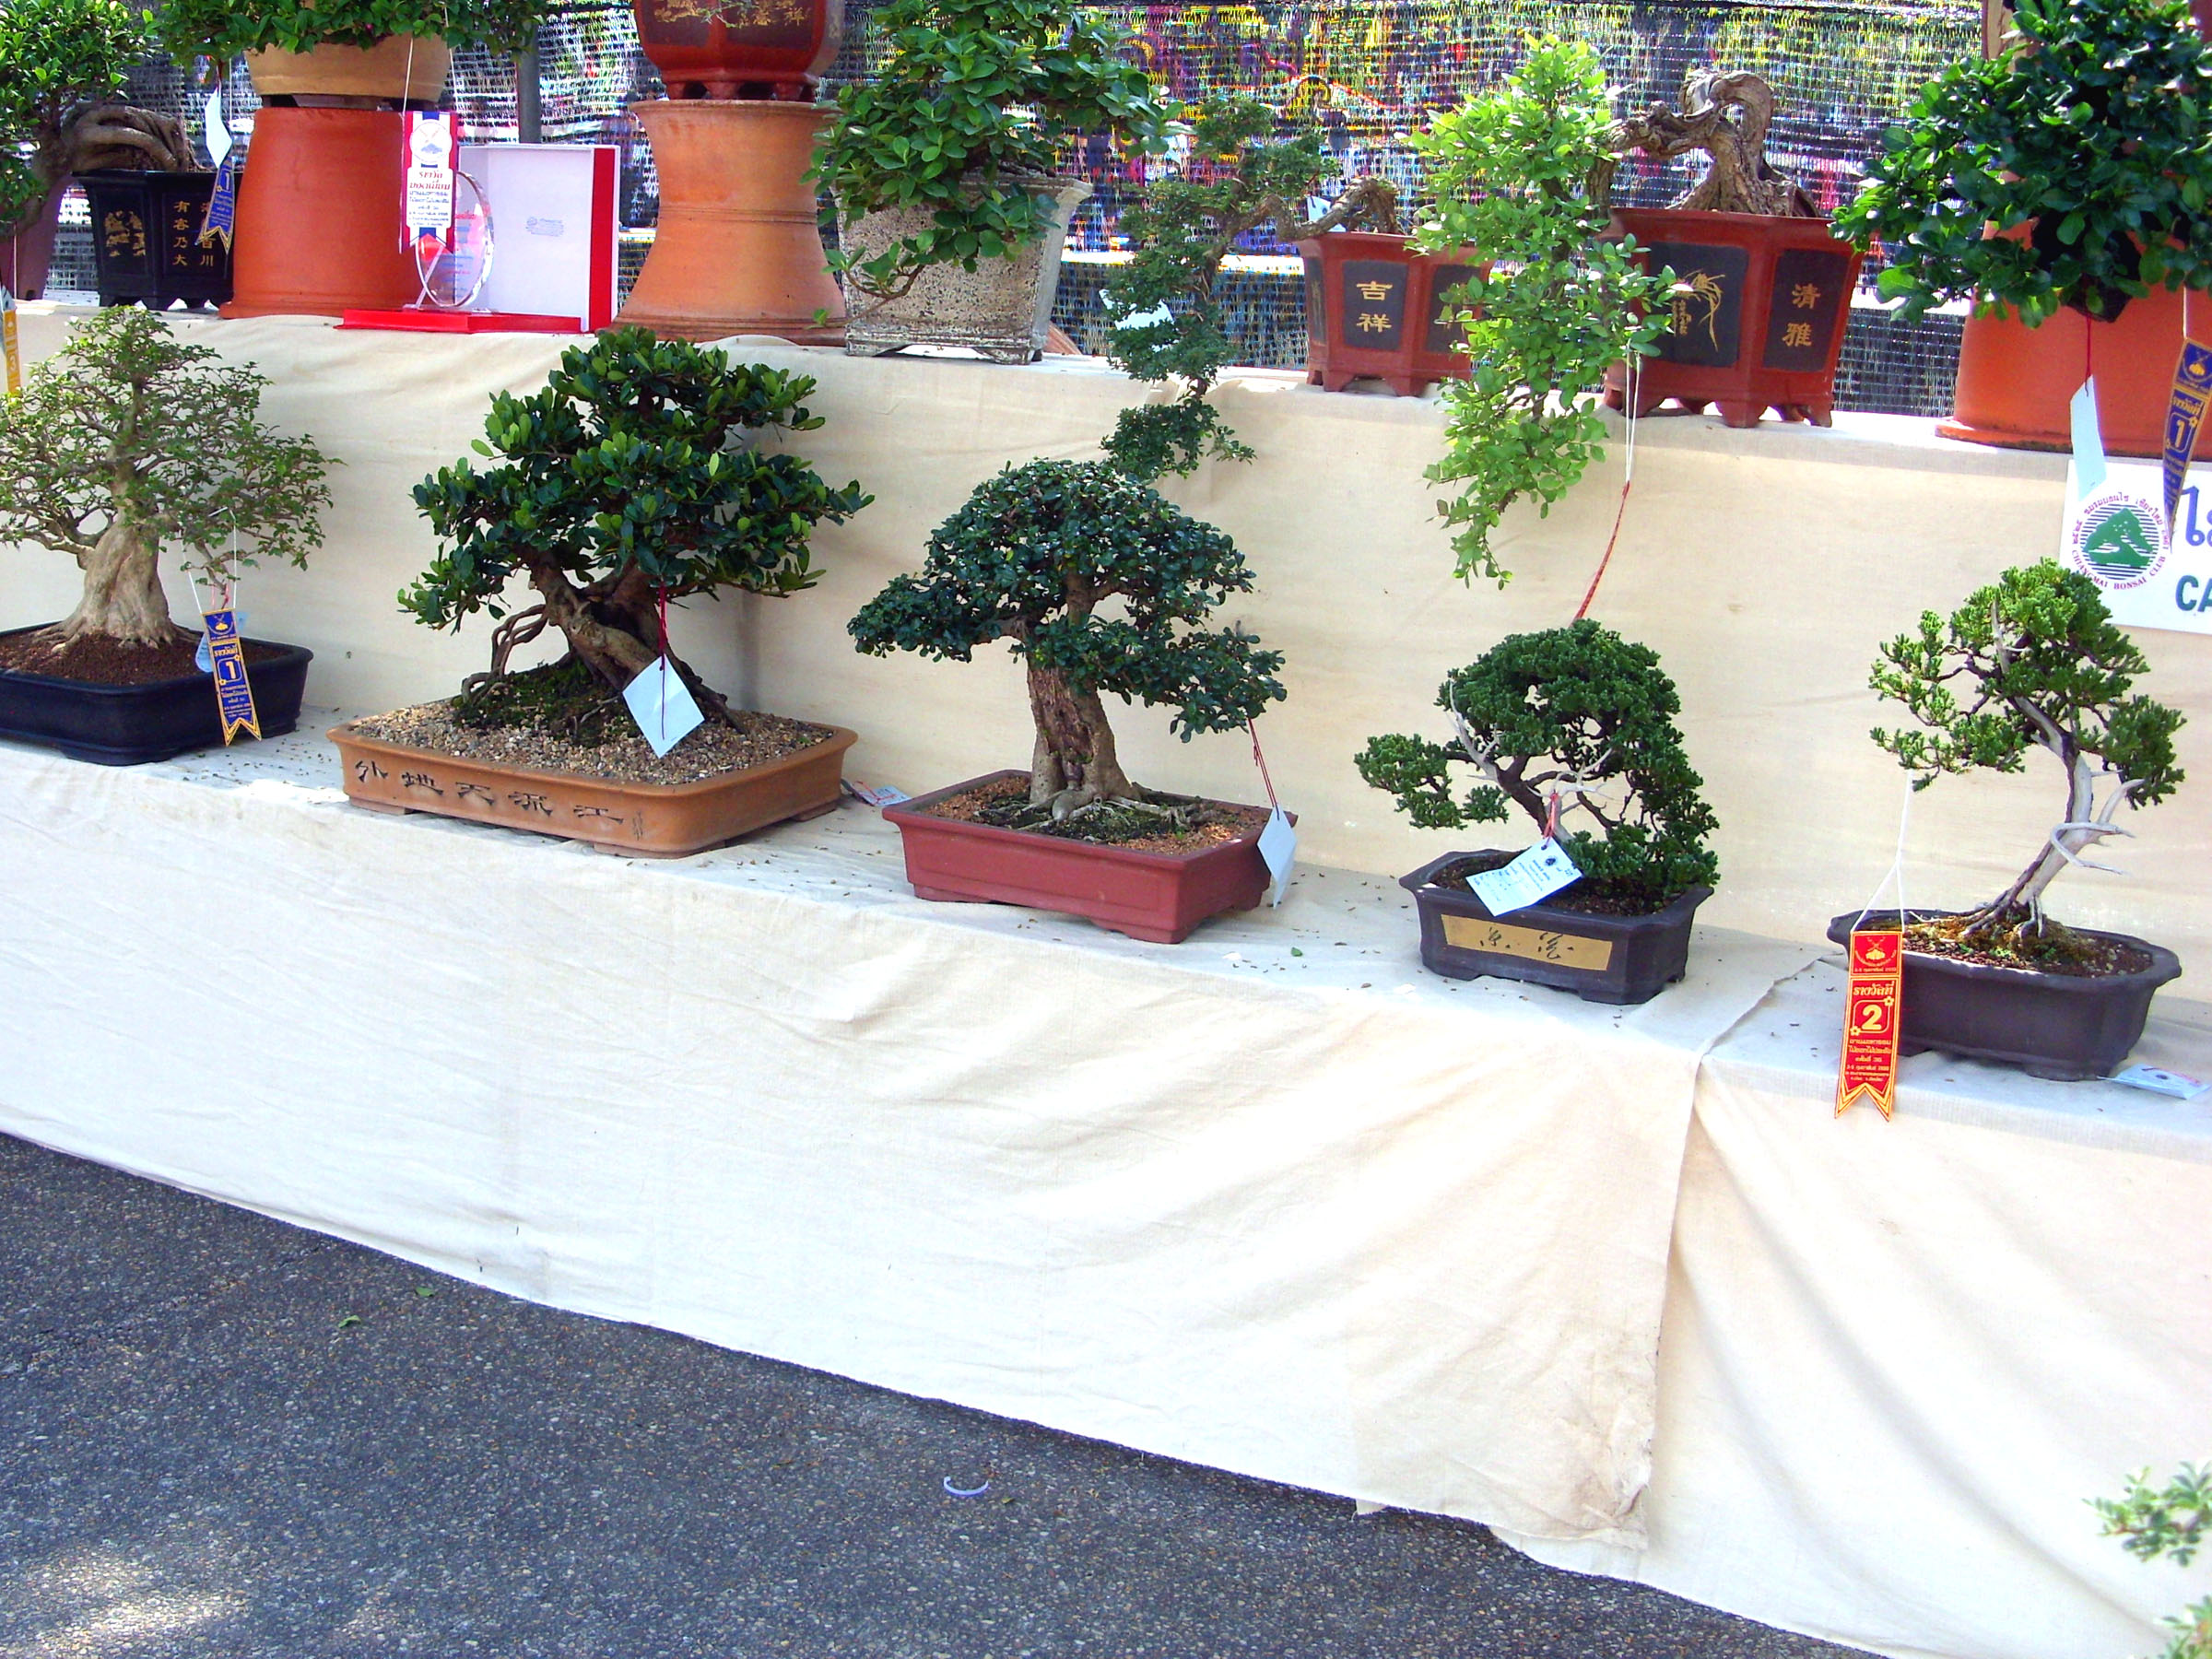 Bonsai display, Bonsai, Exhibit, Small, Trees, HQ Photo